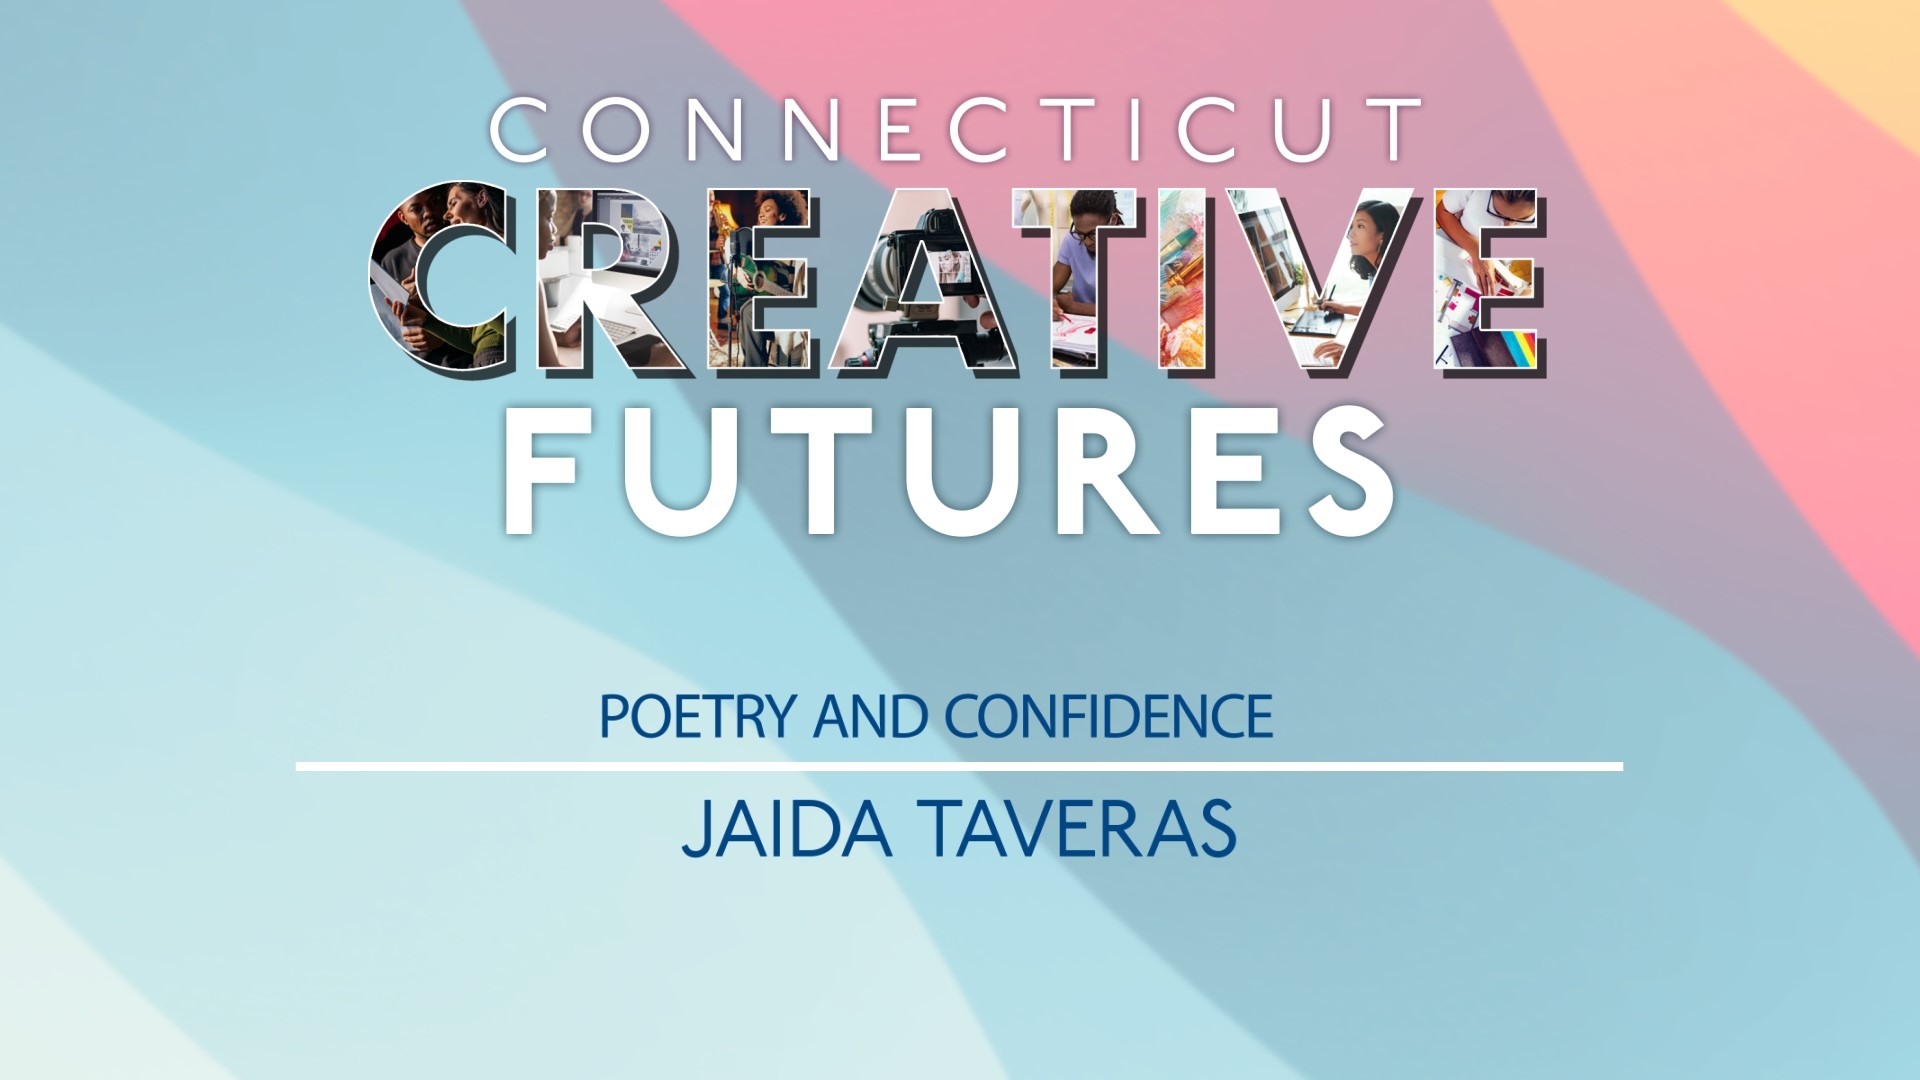 Jaida Taveras shares how poetry helped her confidence grow.